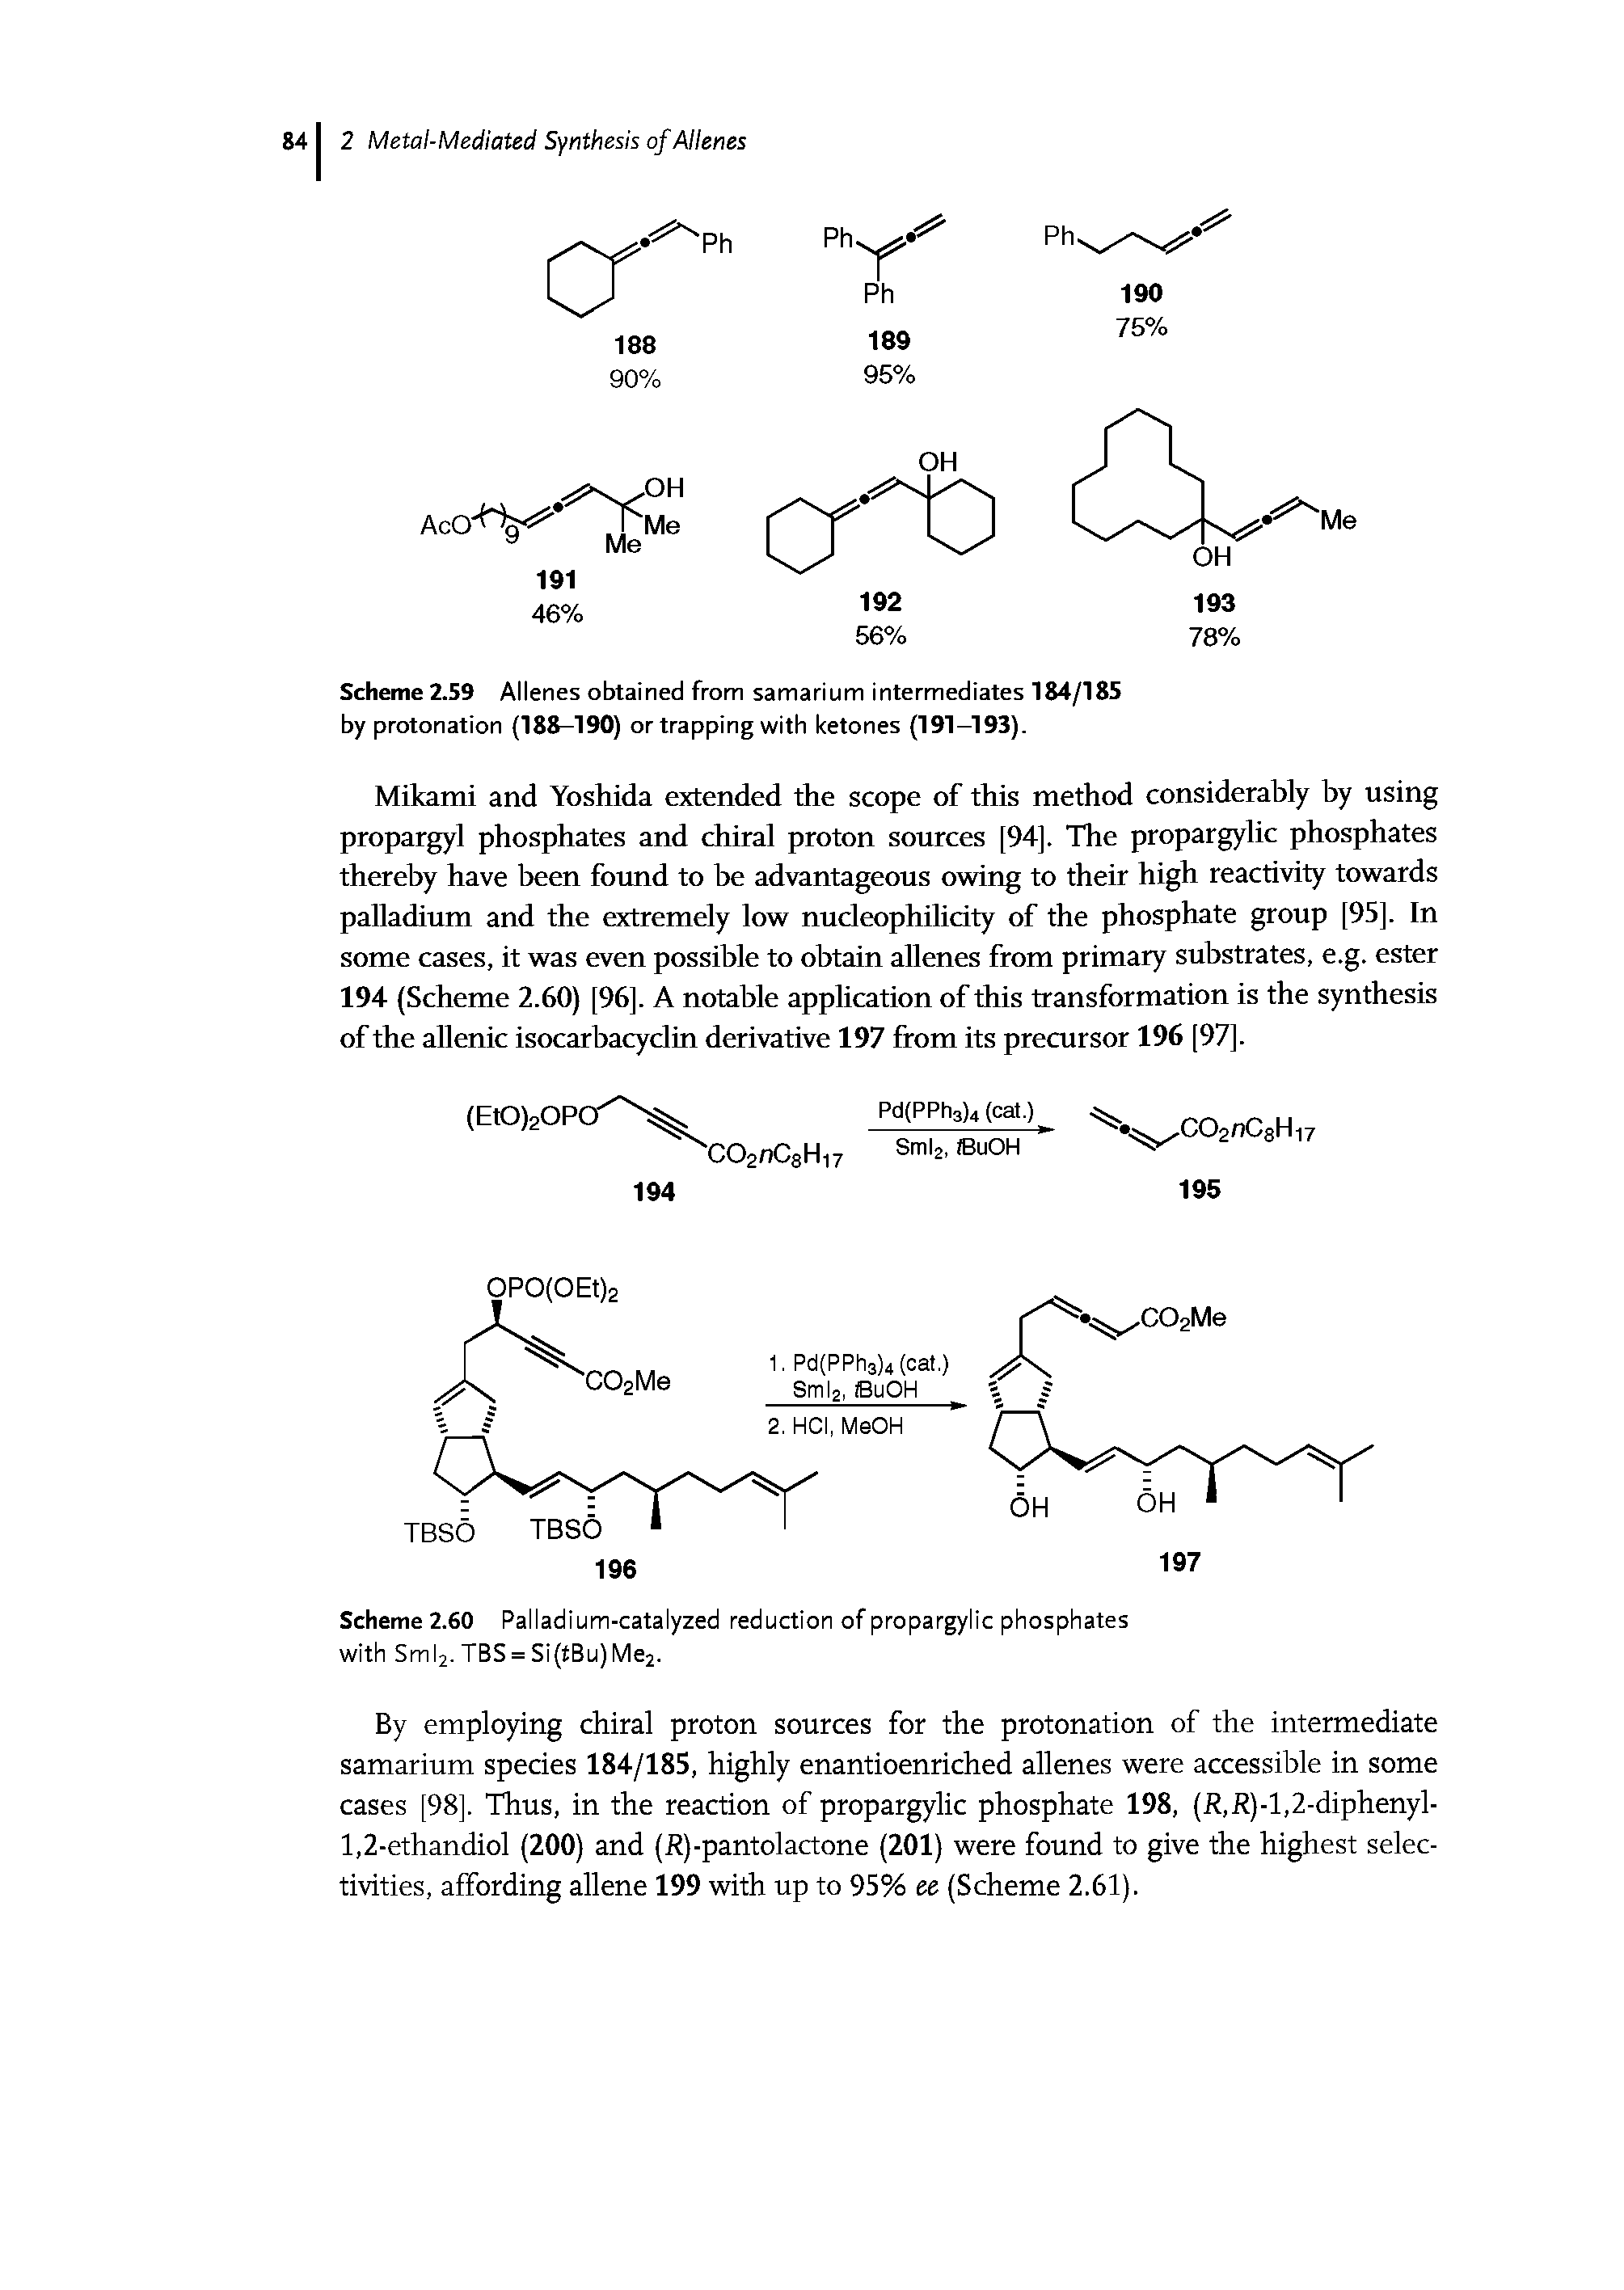 Scheme 2.60 Palladium-catalyzed reduction of propargylic phosphates with Sml2. TBS = Si(tBu)Me2.